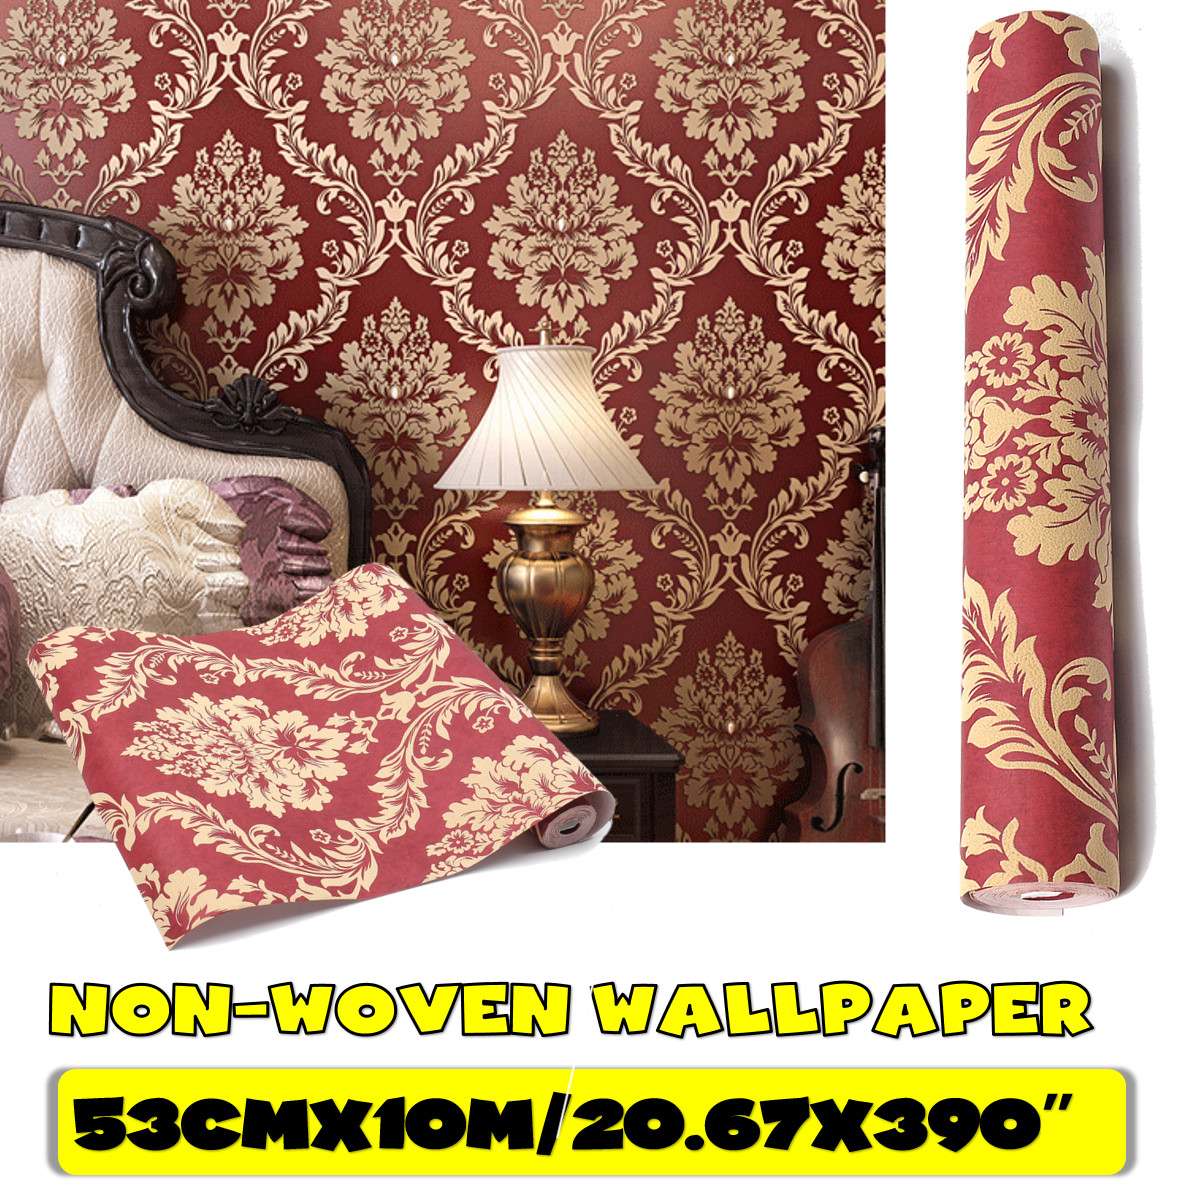 53Cm * 10M 3D Rode Wijn Europese Stijl Vliesbehang Klassieke Wall Paper Roll Wandbekleding Luxe behang